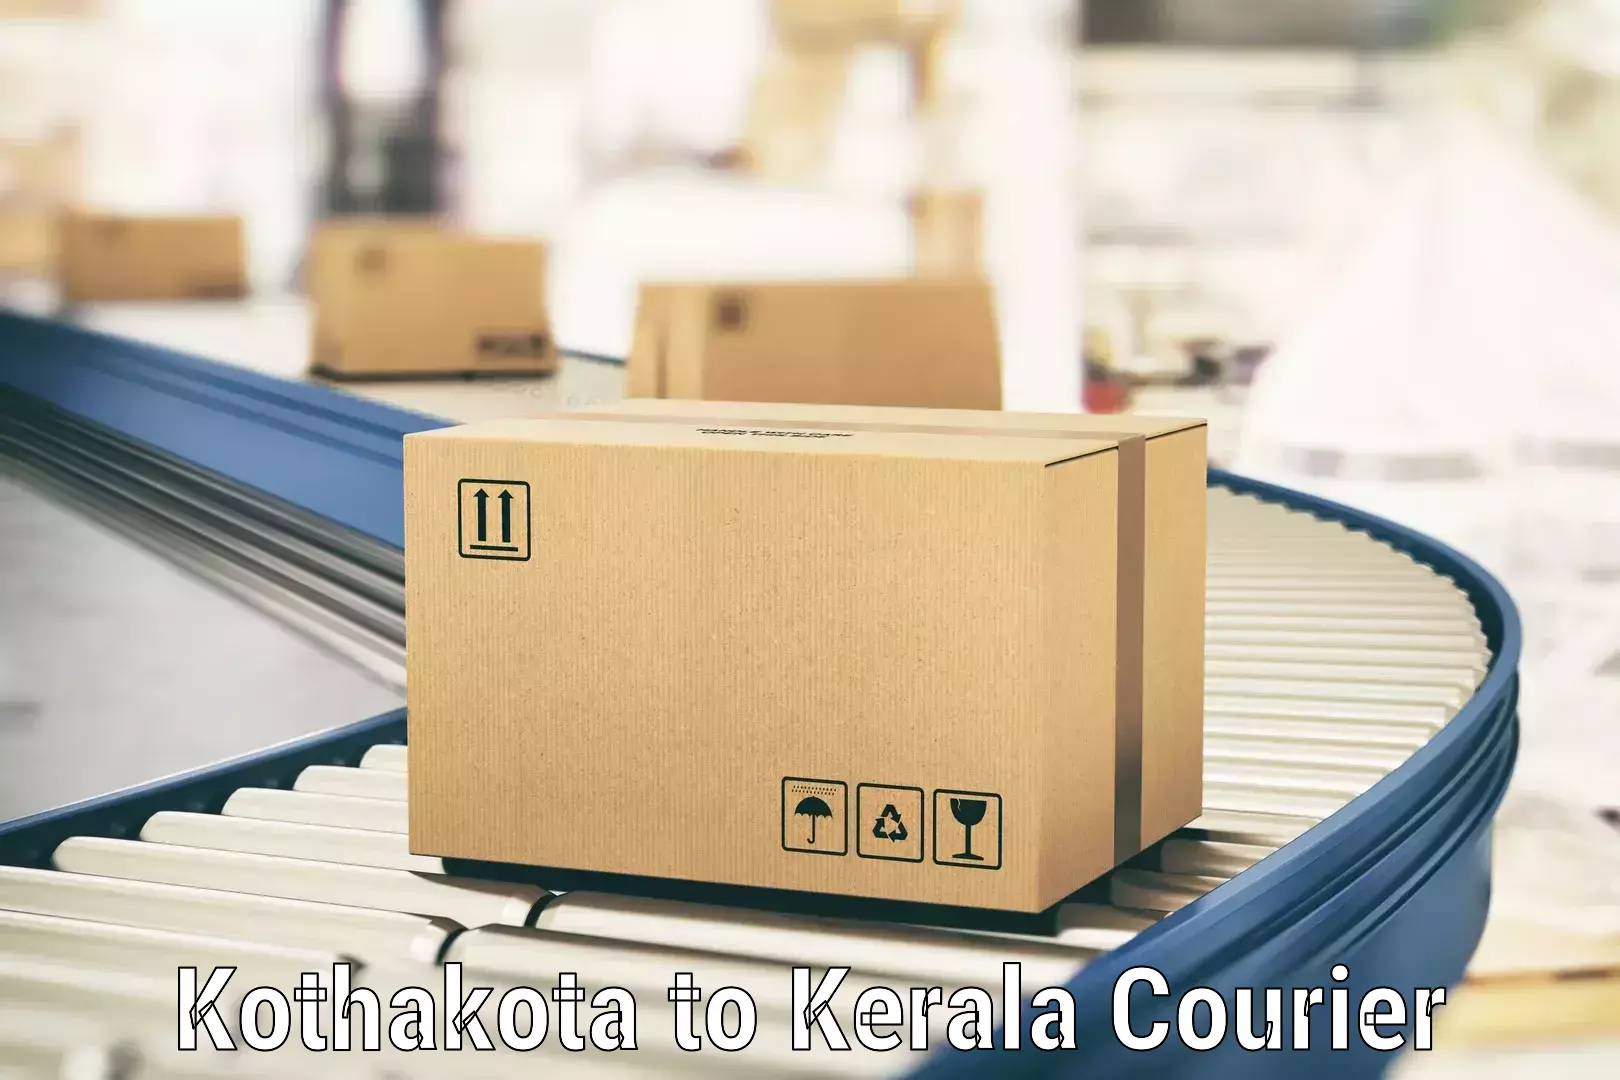 Supply chain efficiency Kothakota to Kerala